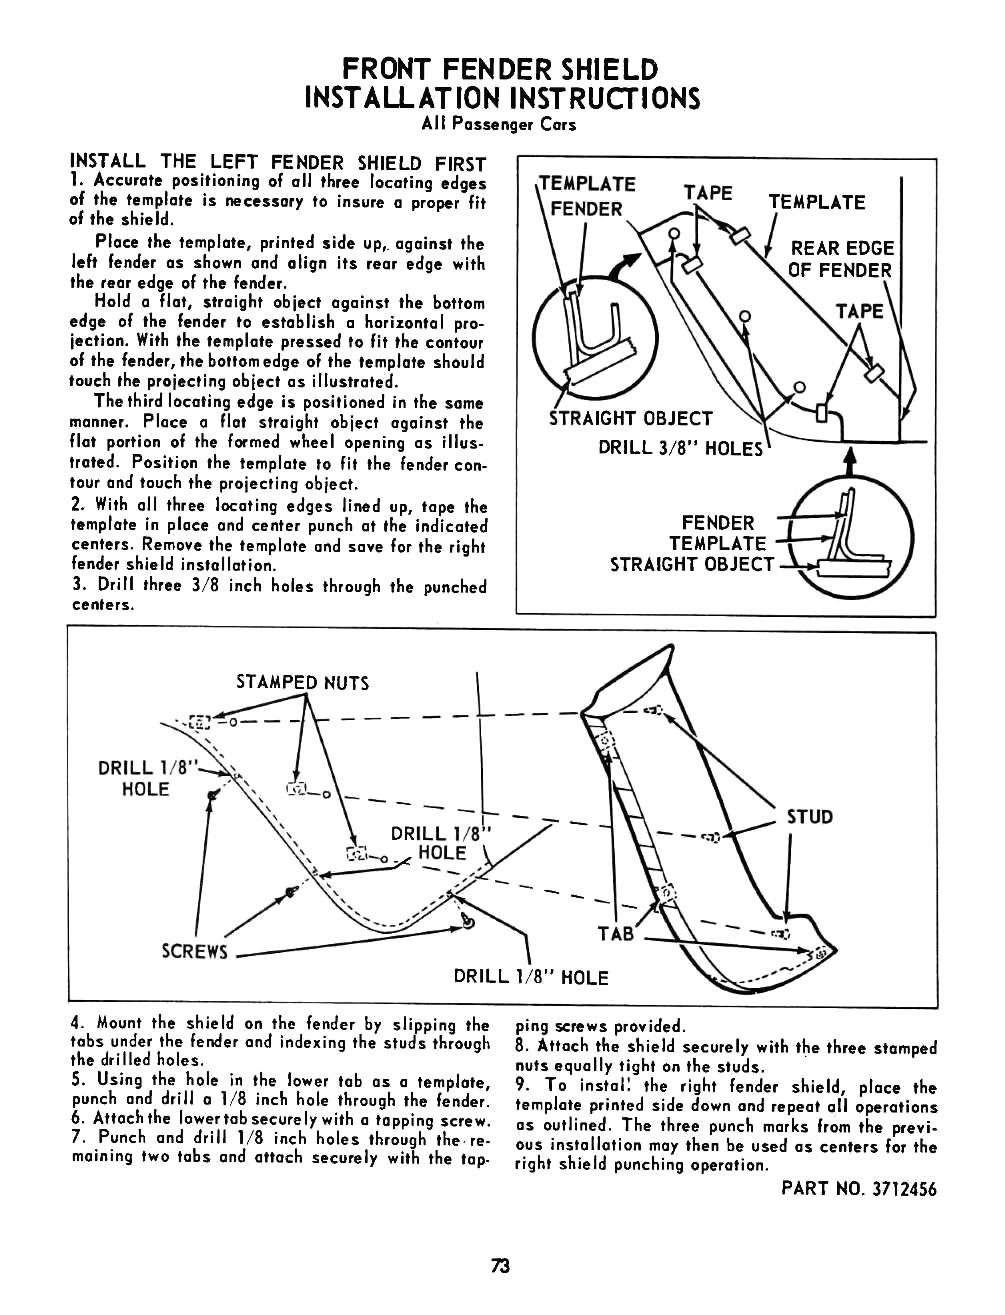 1955_Chevrolet_Acc_Manual-73